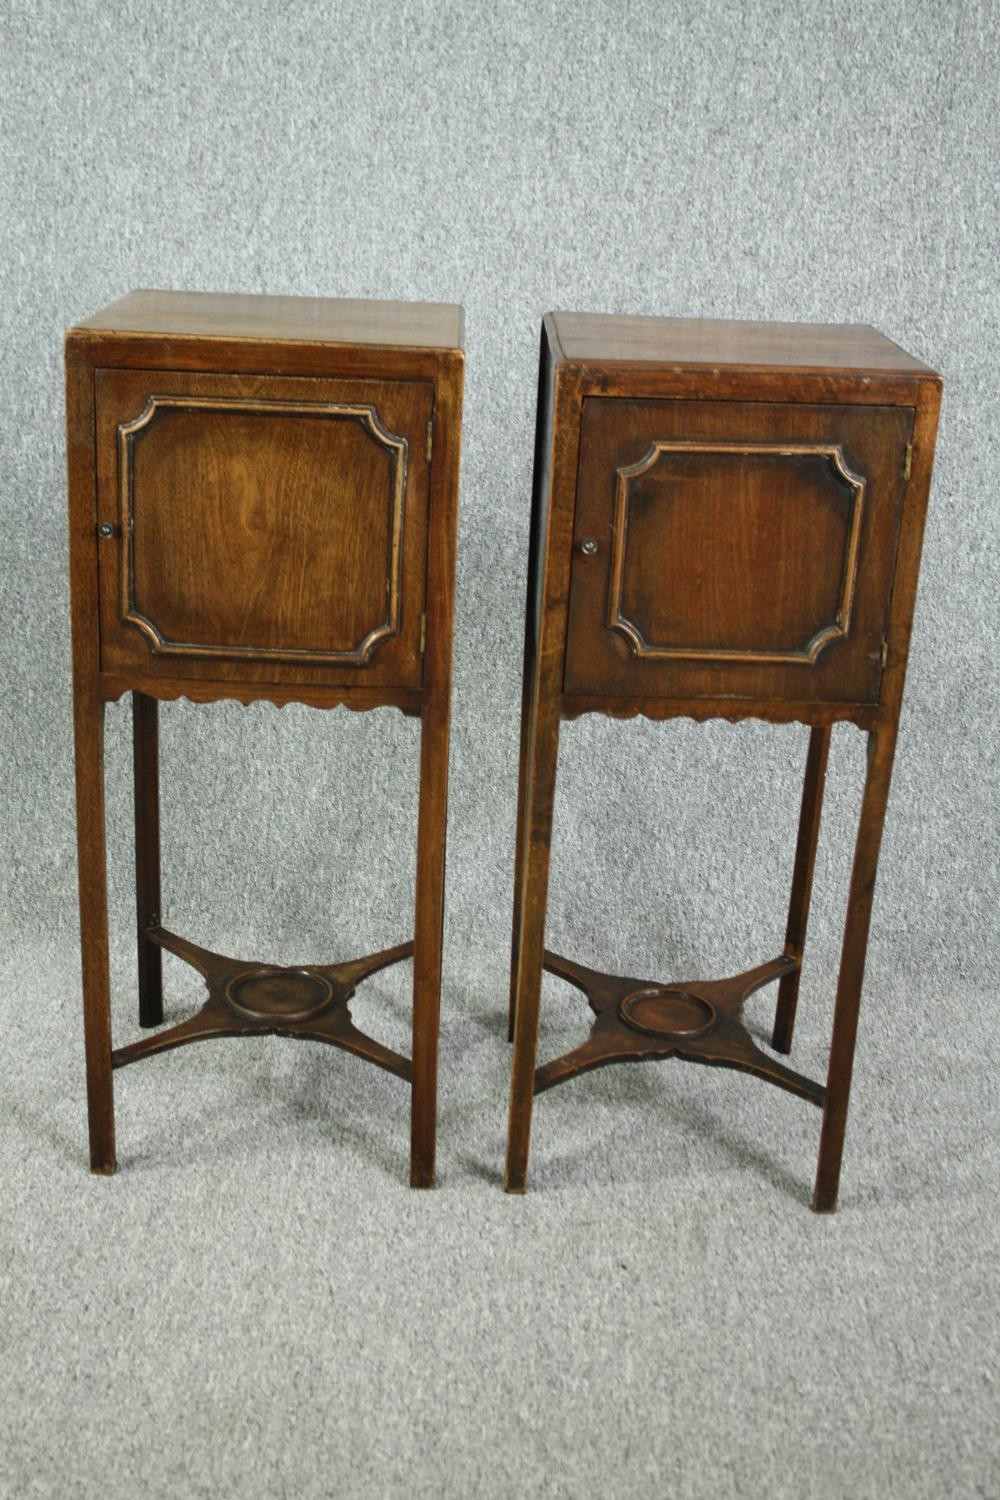 Two similar pot cupboards, 19th century mahogany. H.80 W.32 D.32cm. (each)